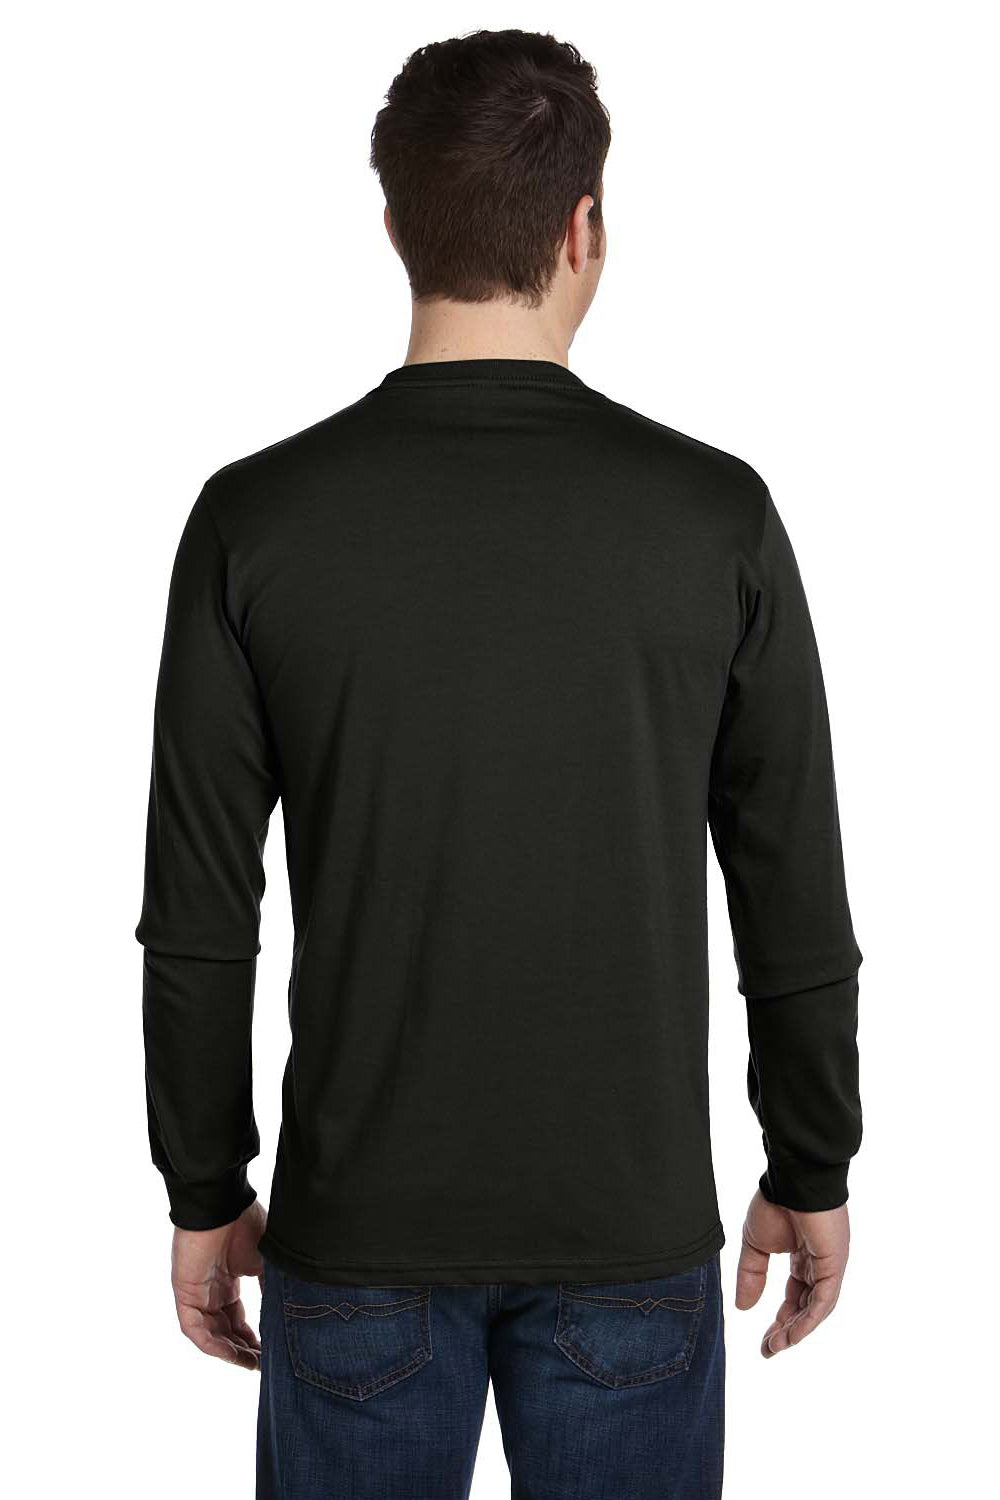 Econscious EC1500 Mens Long Sleeve Crewneck T-Shirt Black Back